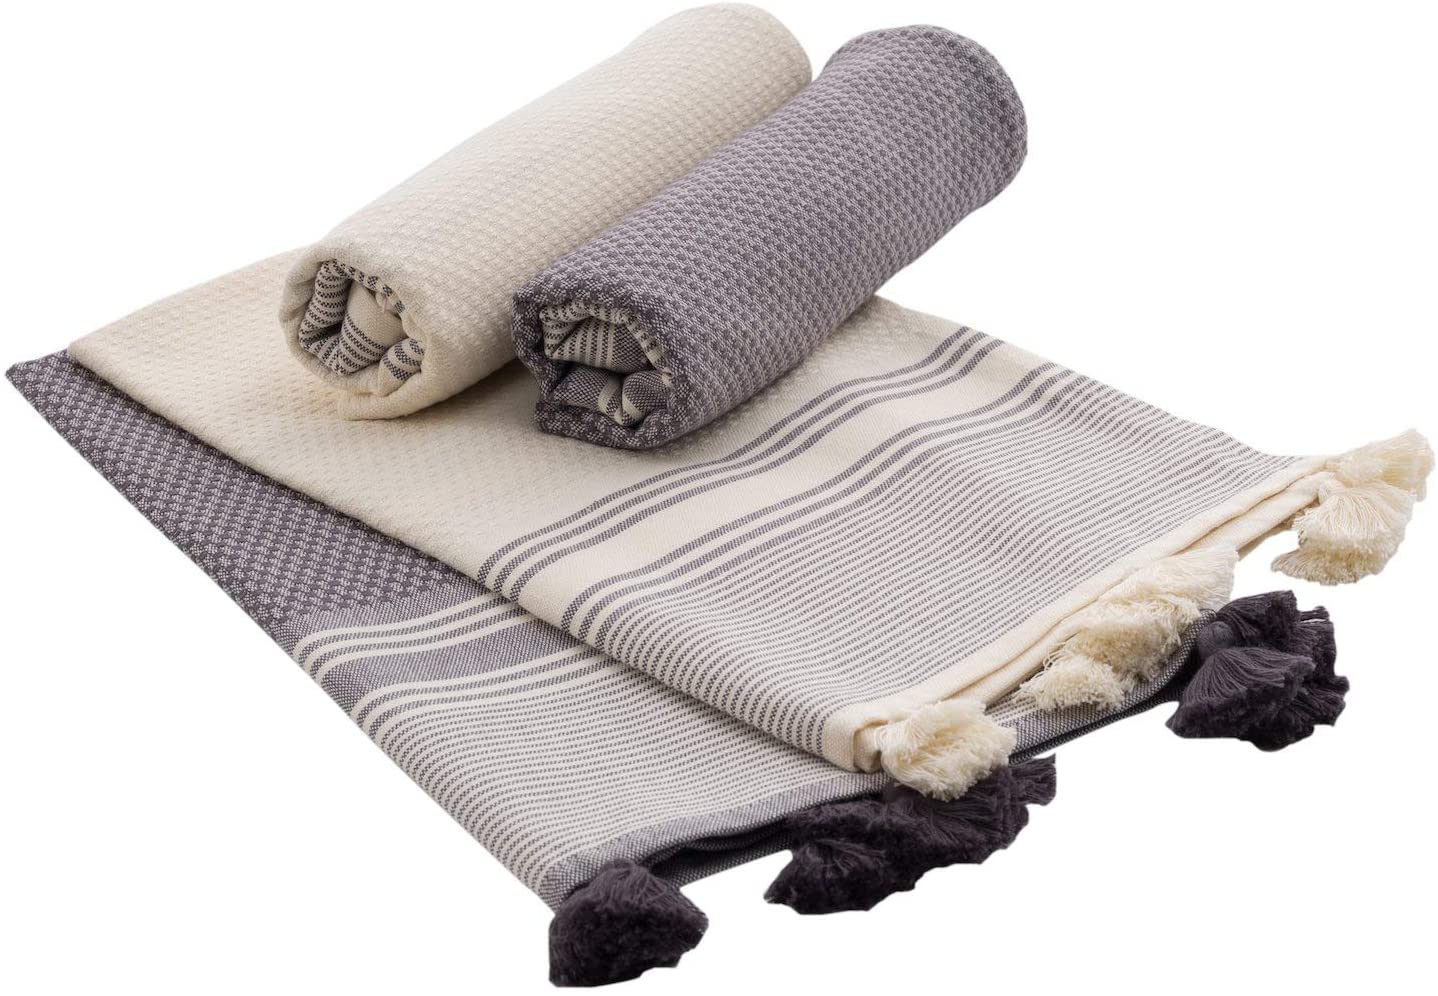 Ivory Turkish Cotton Towels